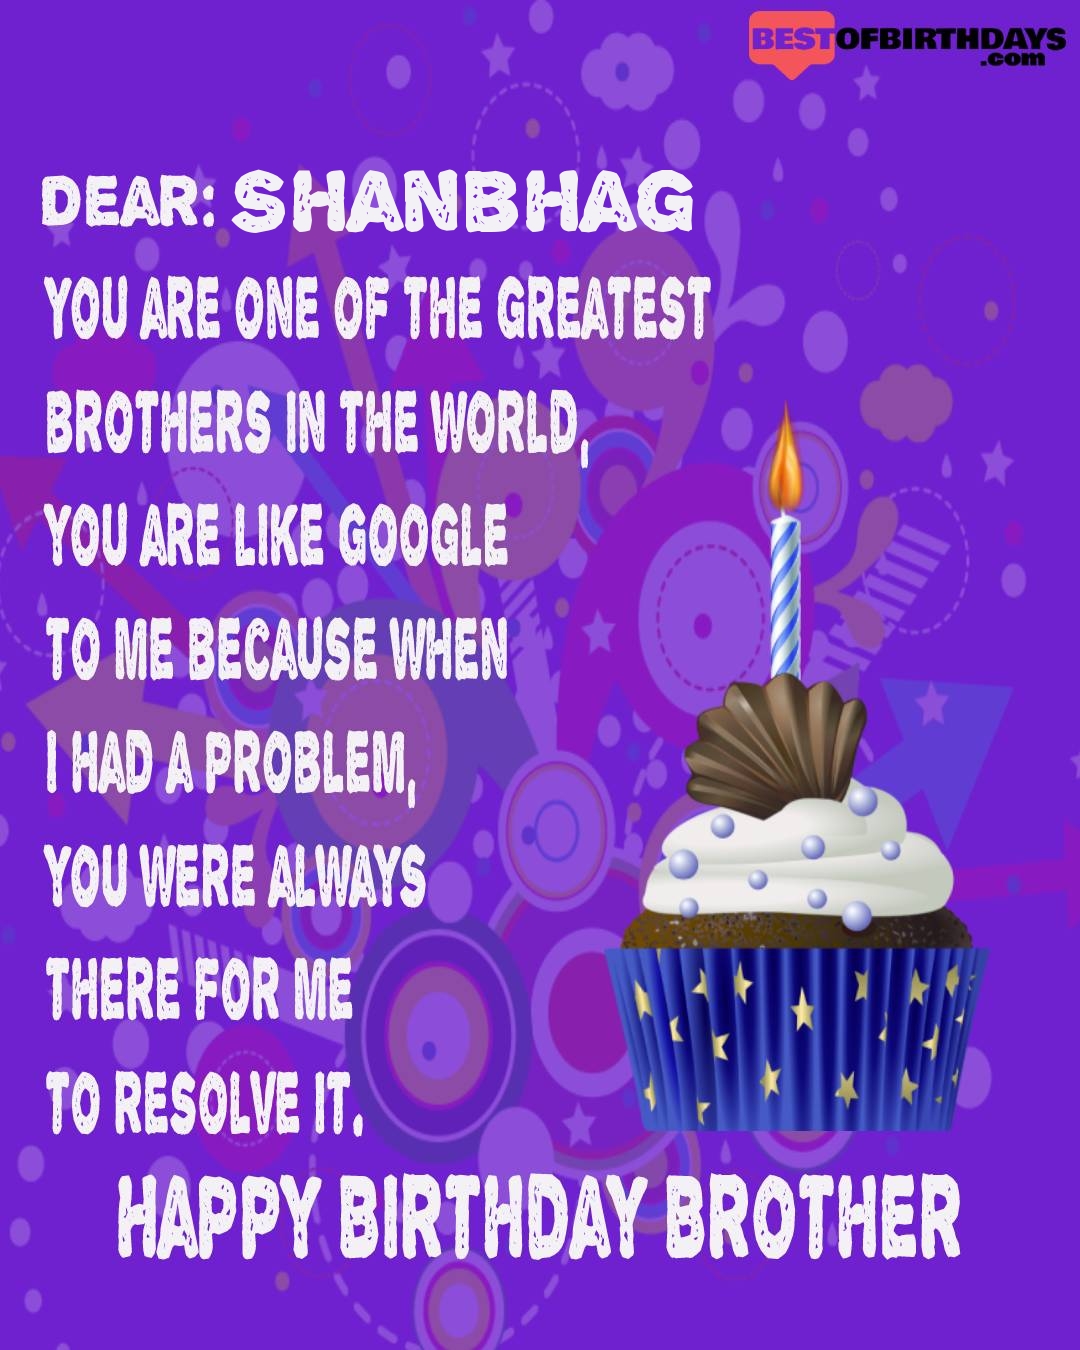 Happy birthday shanbhag bhai brother bro